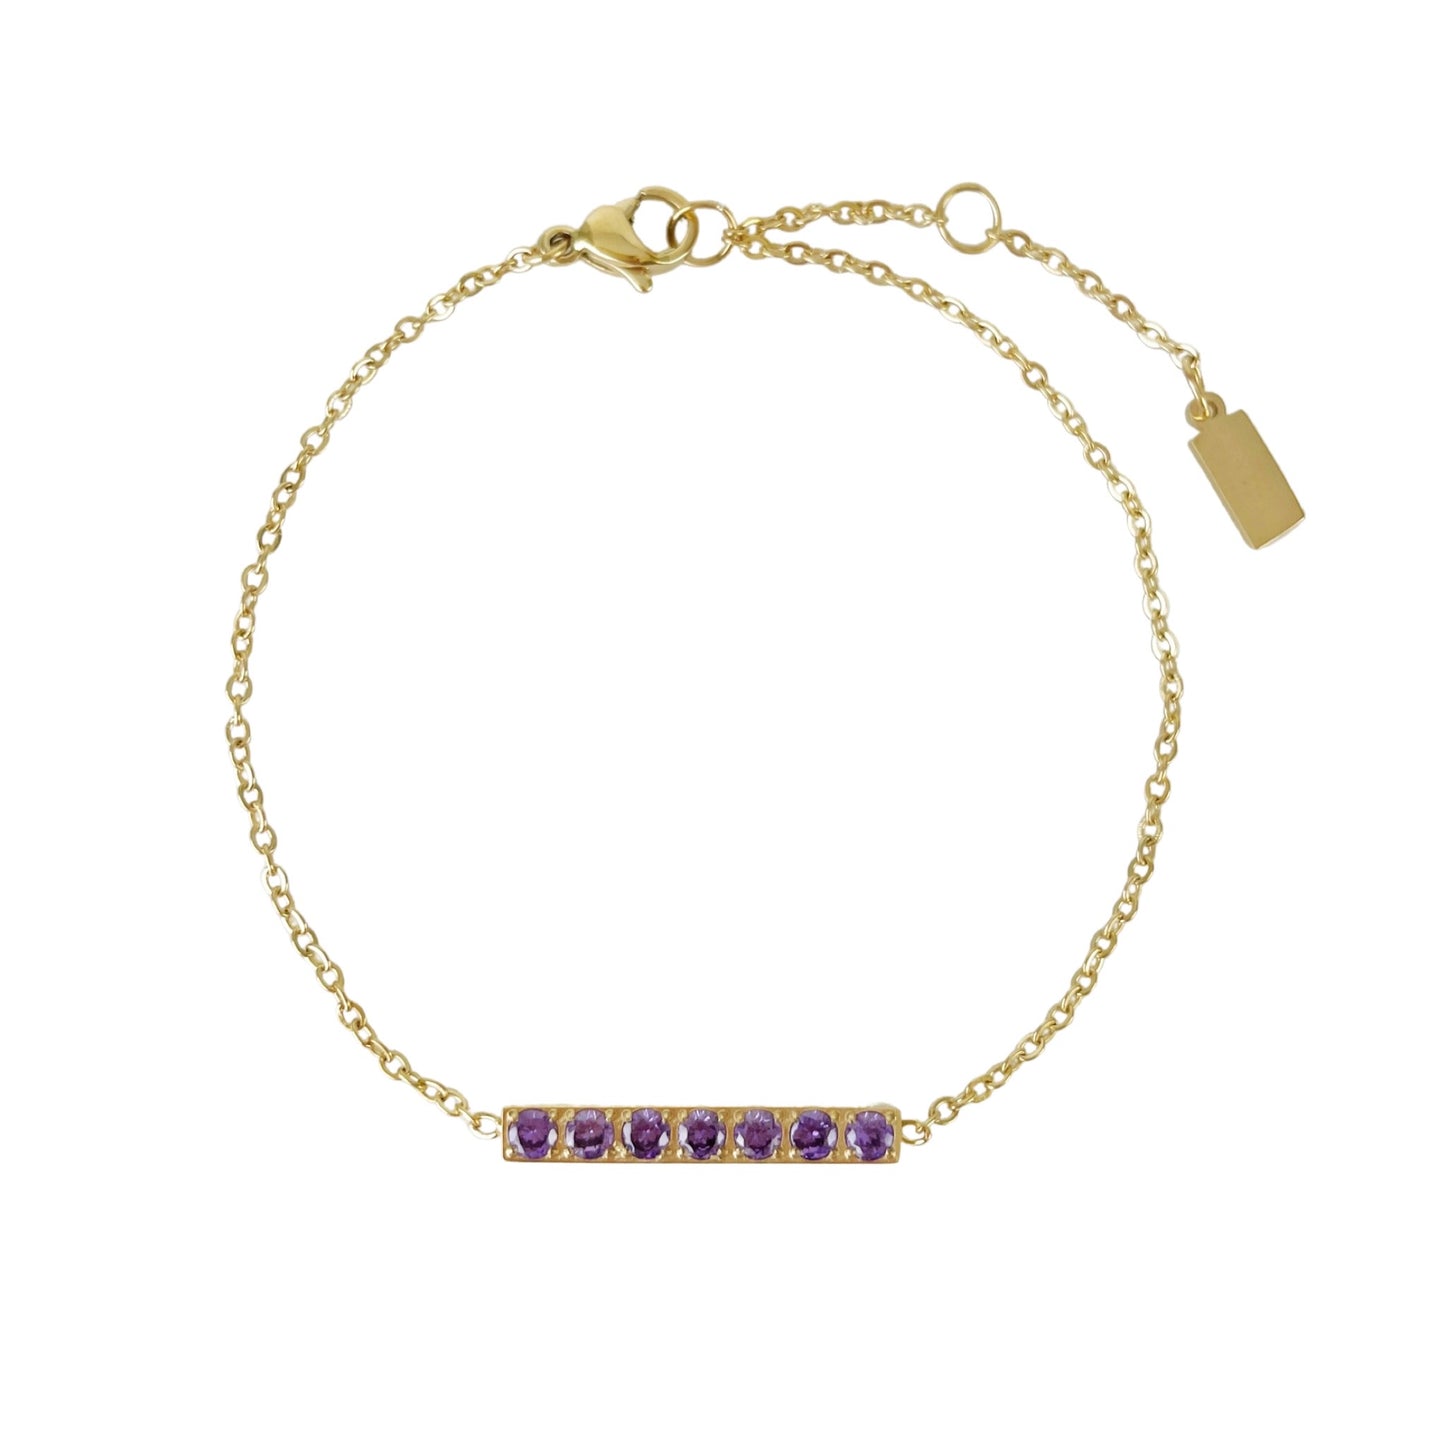 RFB0160 Bracelet